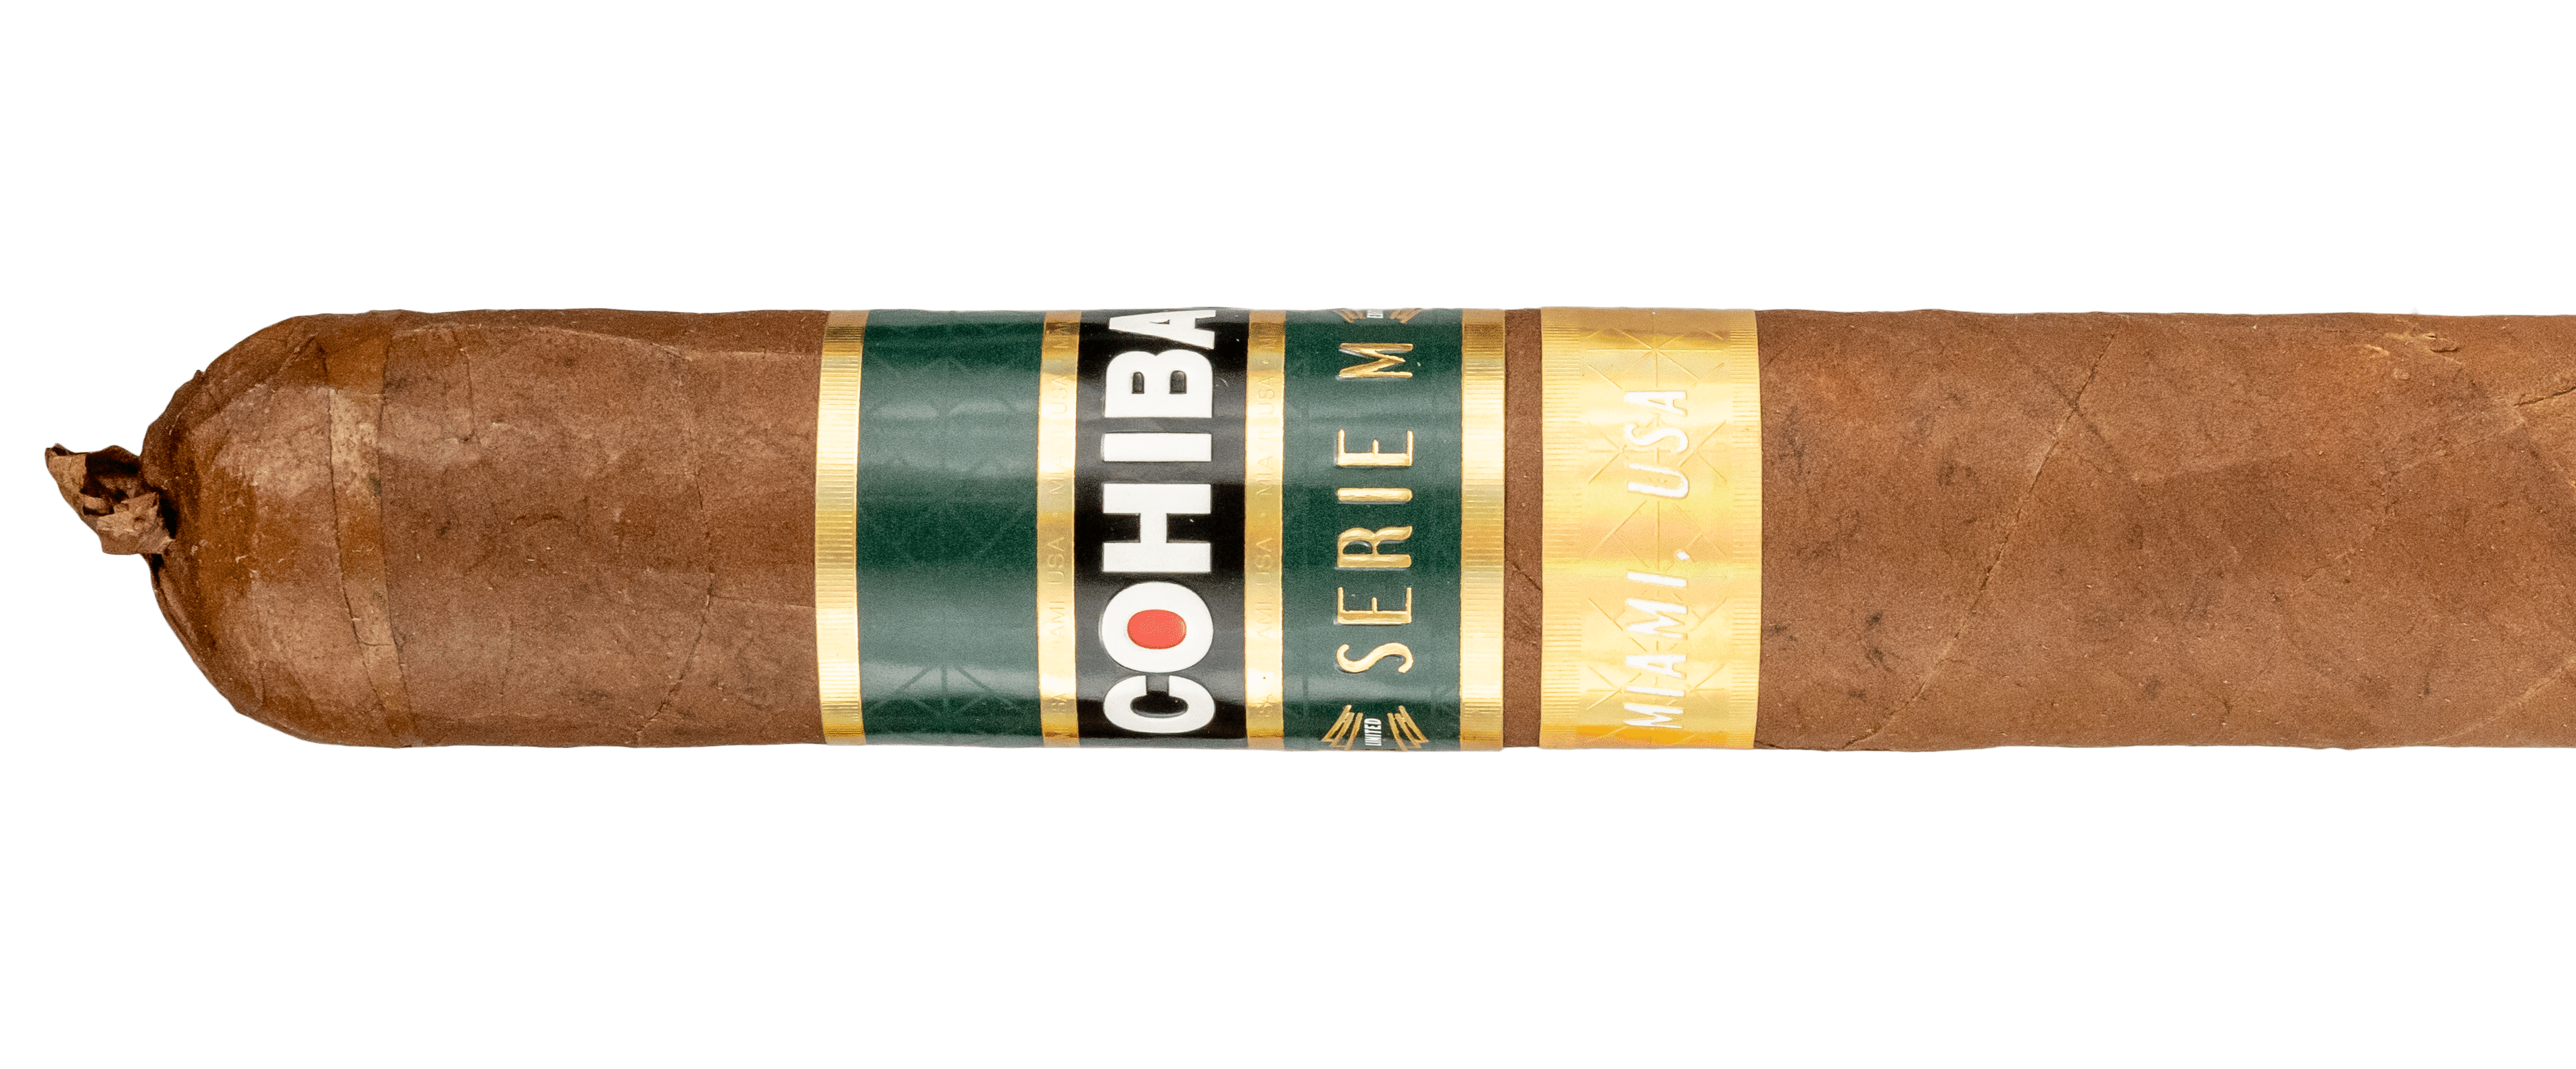 Cohiba Serie M - Blind Cigar Review